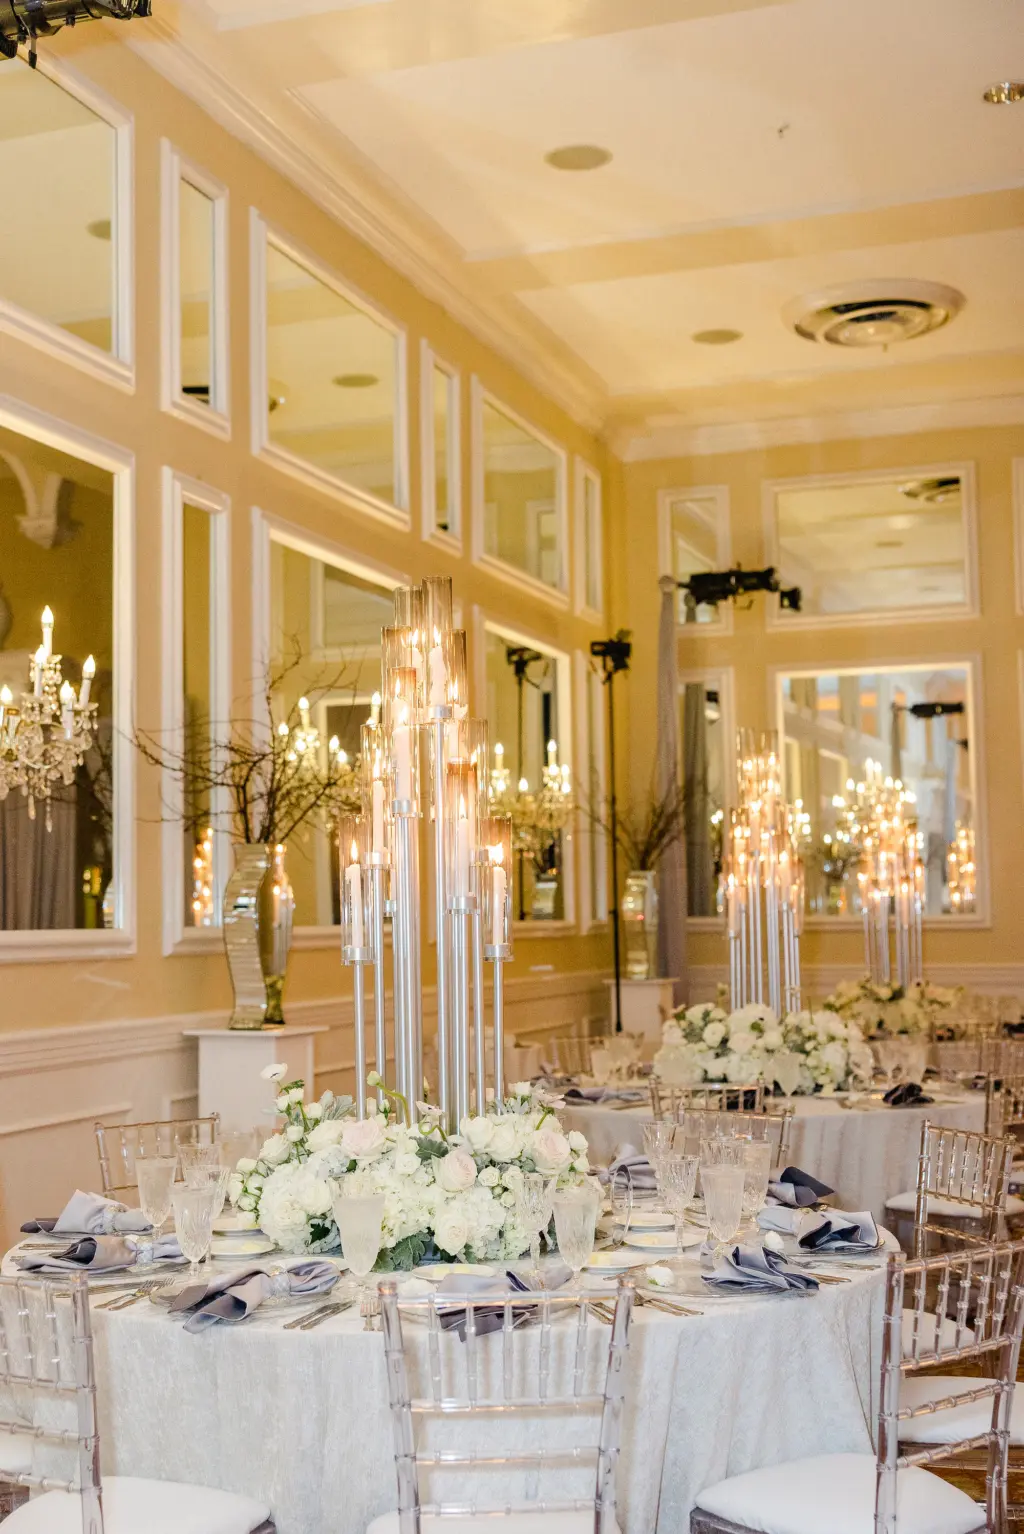 Tall Silver Candelabra Wedding Reception Centerpiece Decor Inspiration with White Monochromatic Anemone, Roses, and Hydrangeas Flower Arrangement Ideas